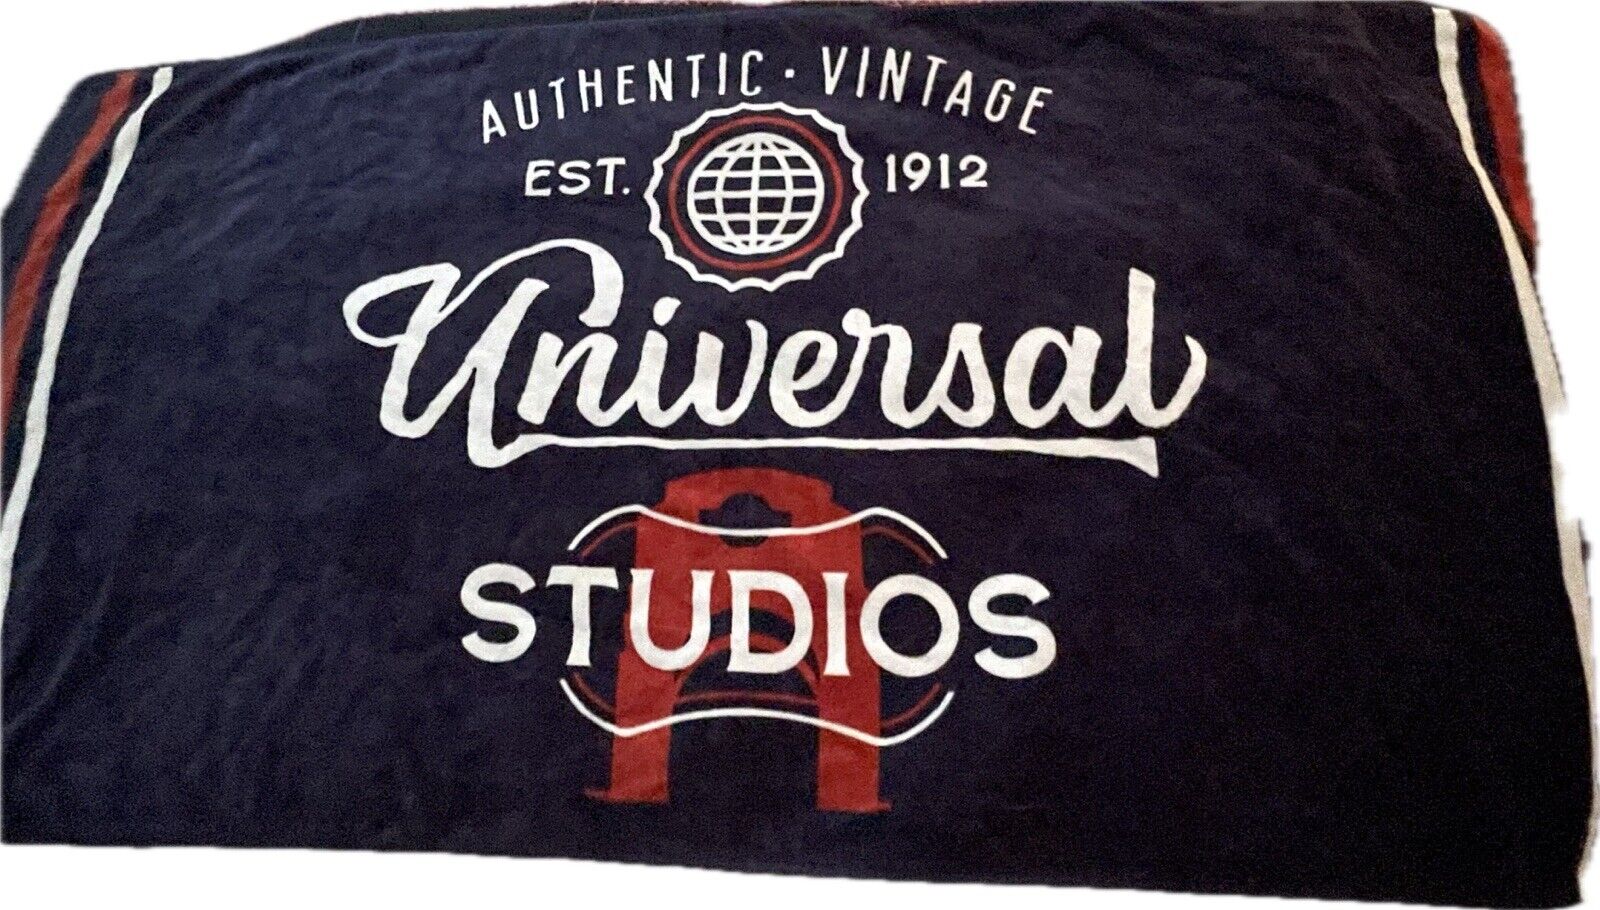 Authentic Vintage Est 1912 Universal Studios Tapestry/Beach Towel